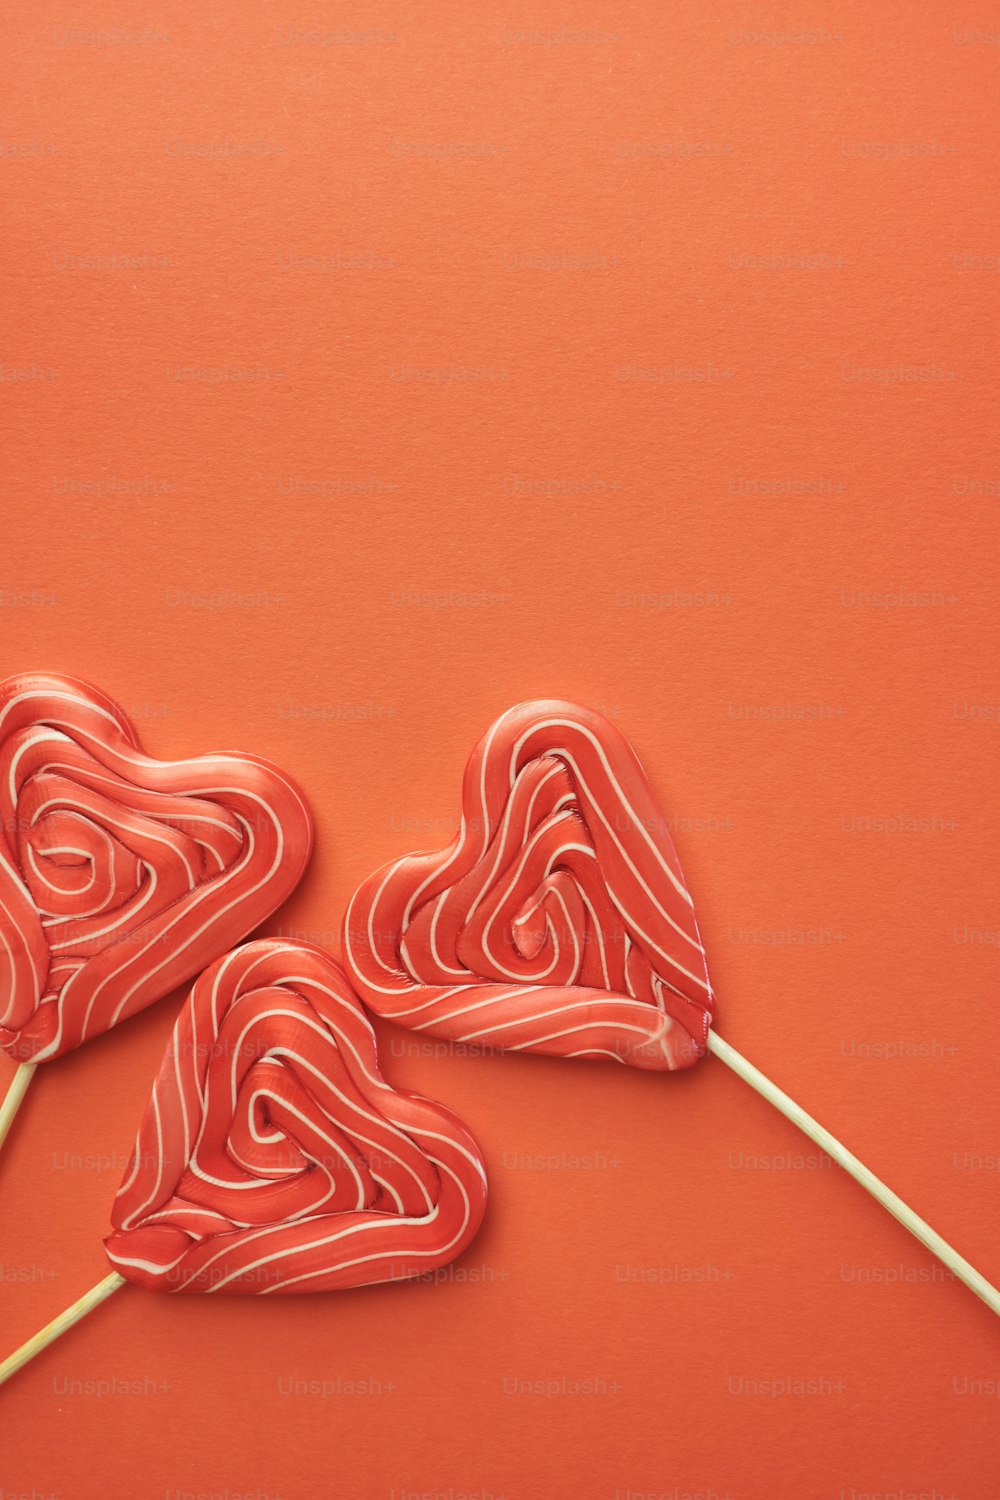 two lollipops shaped like hearts on a stick